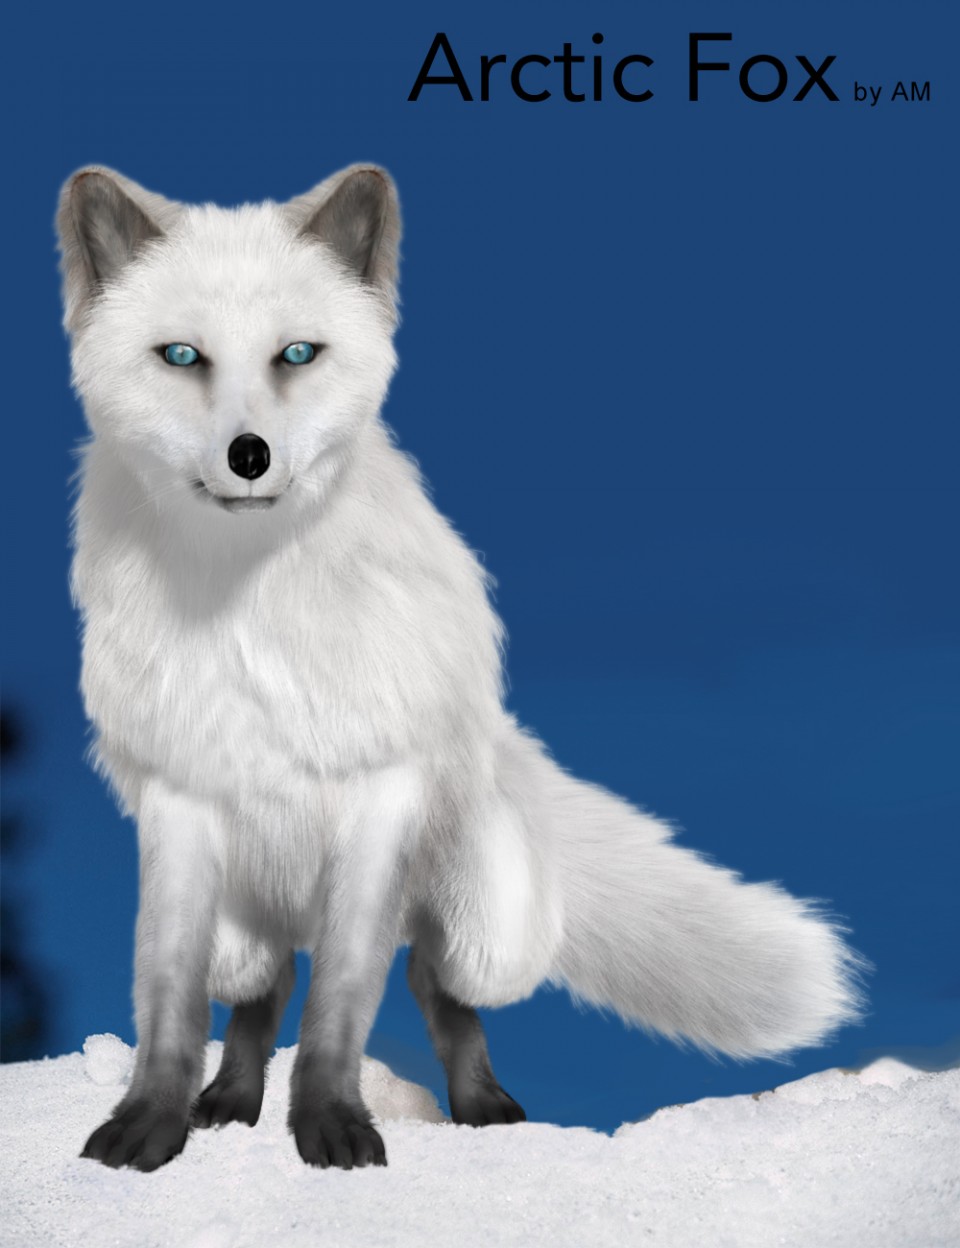 Arctic Fox by AM